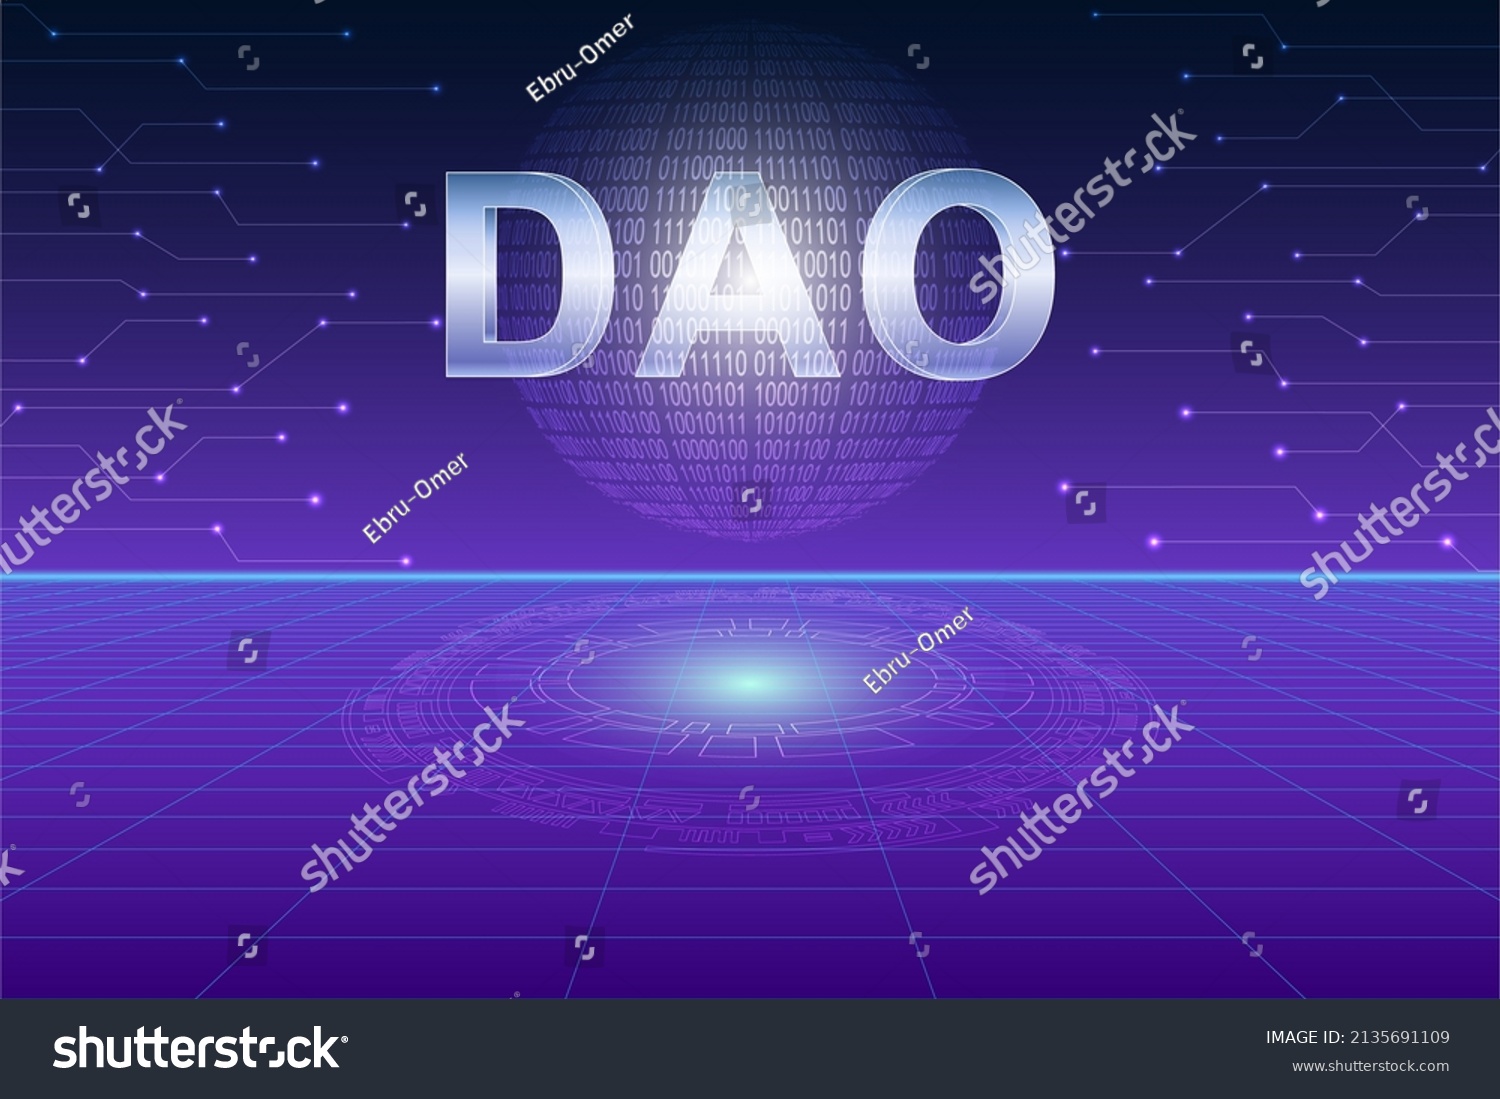 SVG of DAO, Decentralized autonomous organization concept design. Earth globe composed of digital 1 and 0 on futuristic environmental background. DAO text design. svg